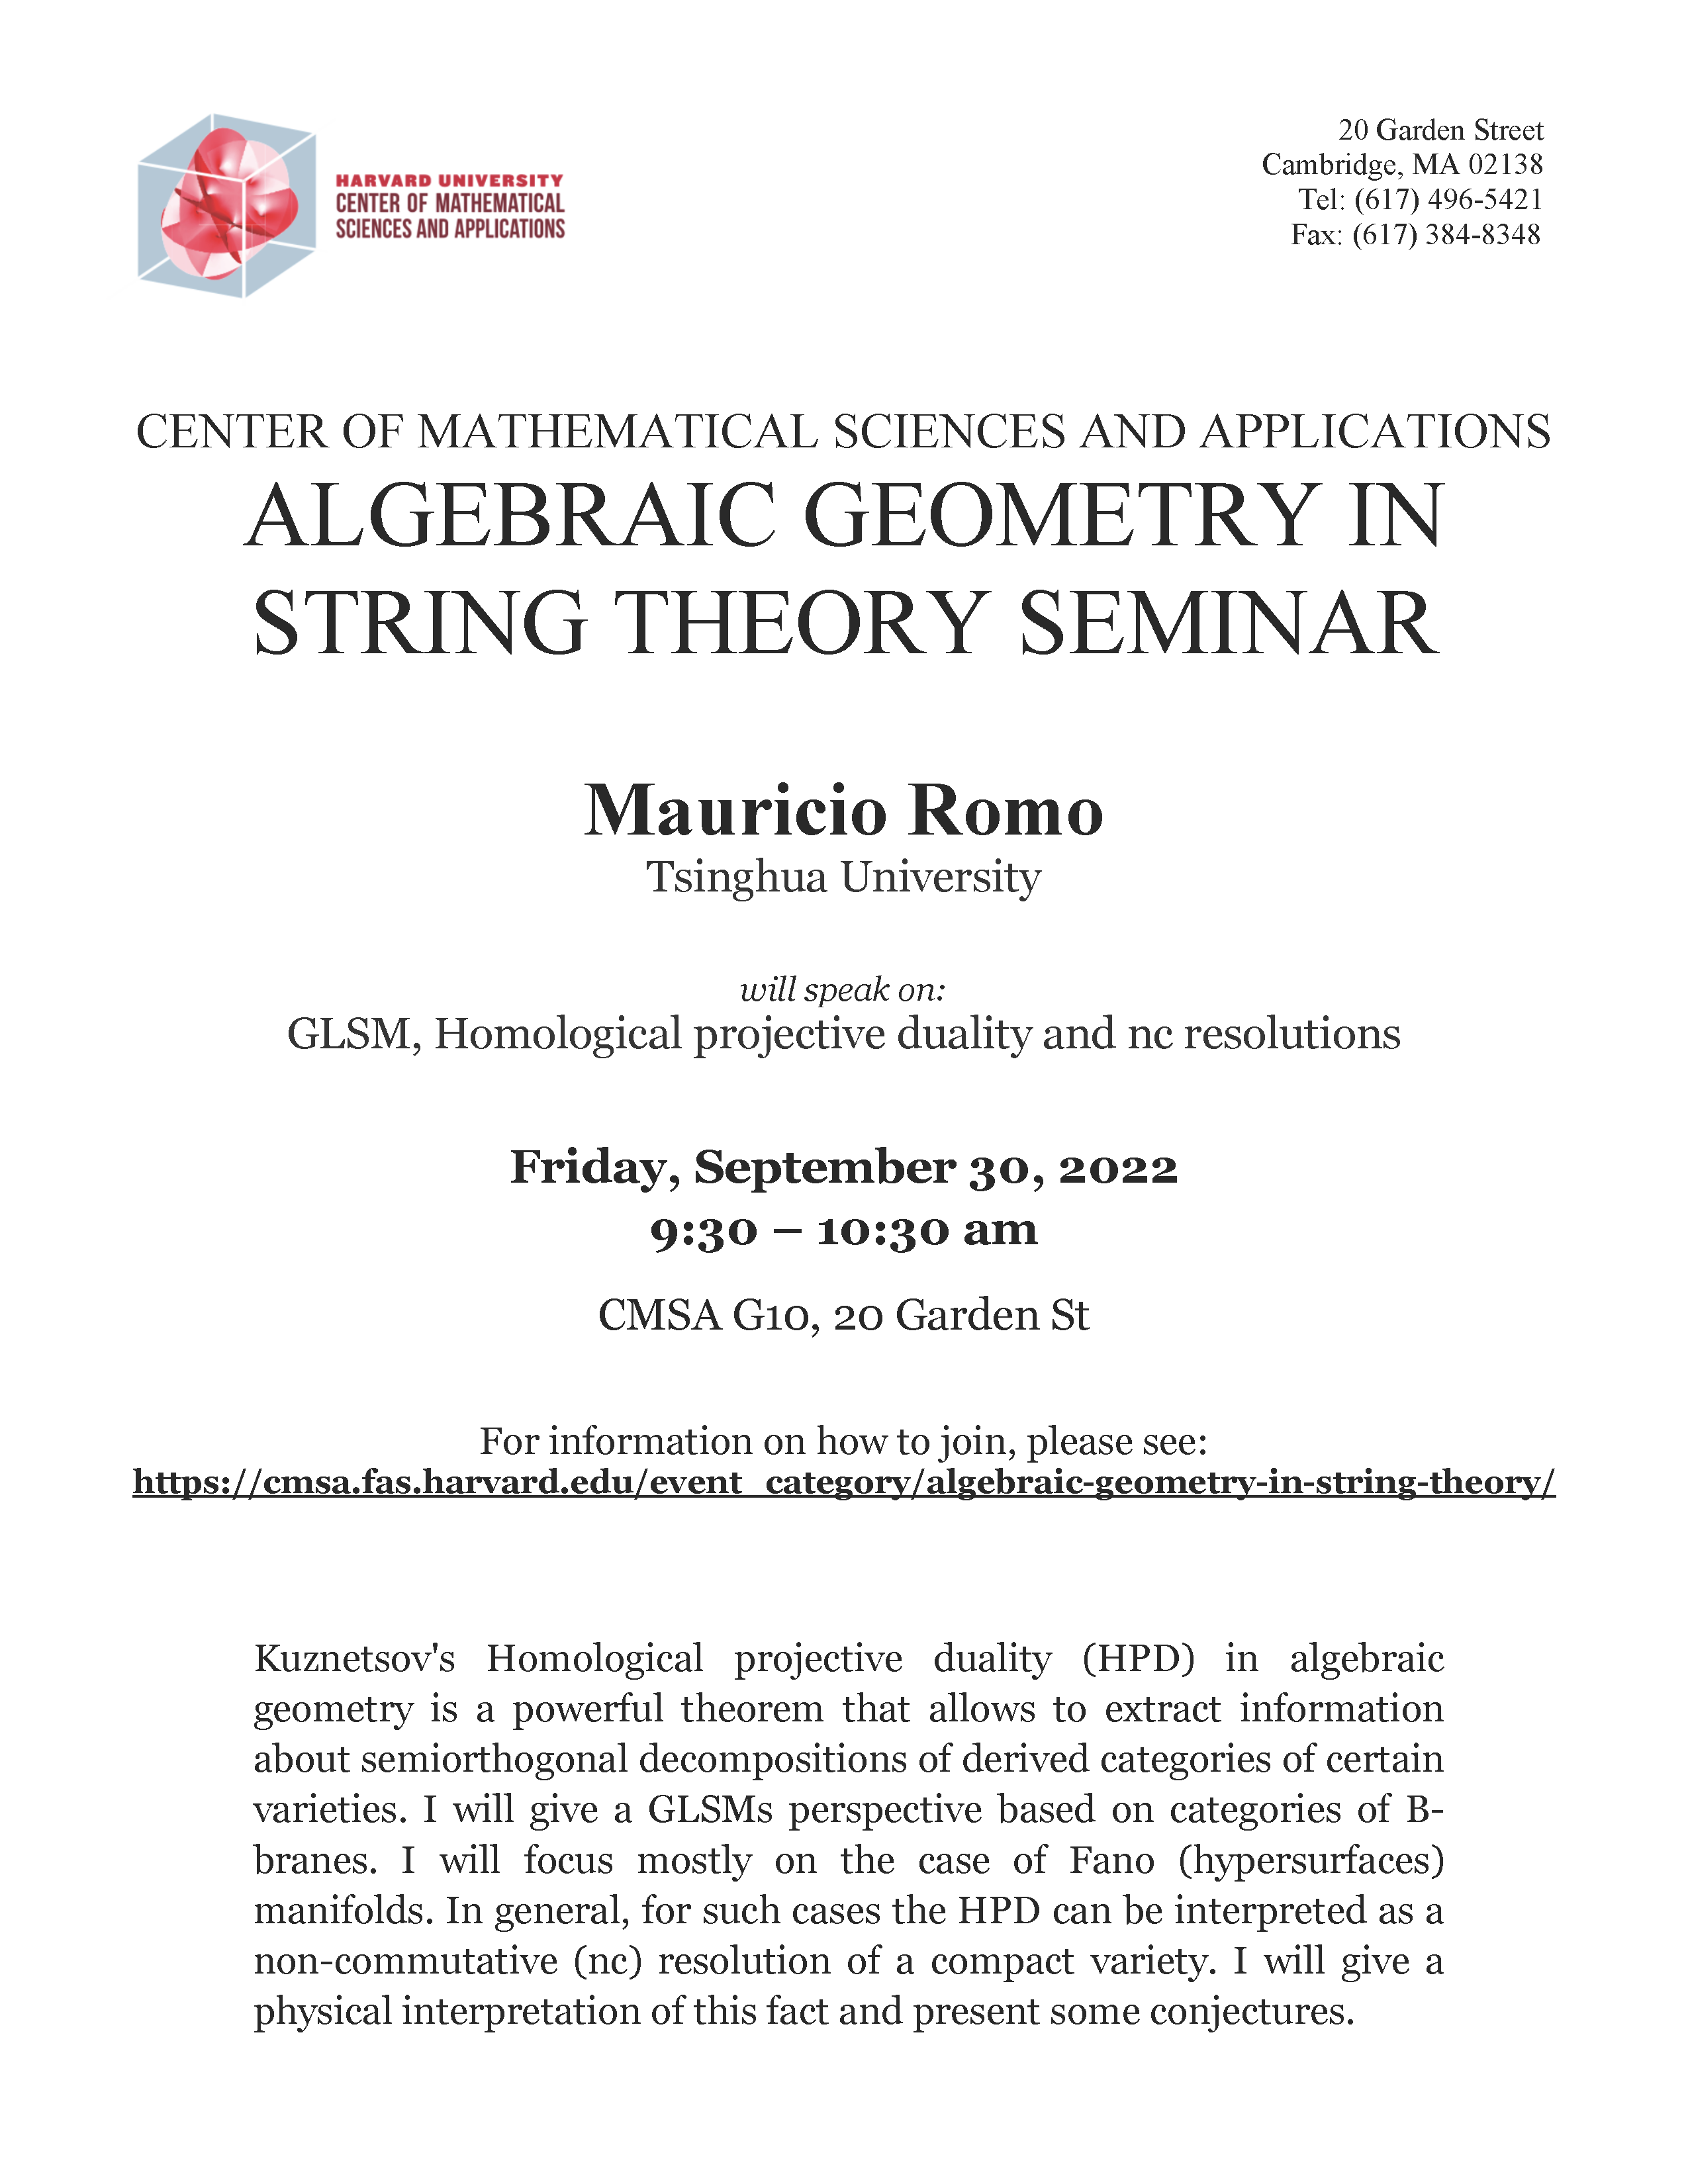 CMSA Algebraic Geometry in String Theory 09.30.2022